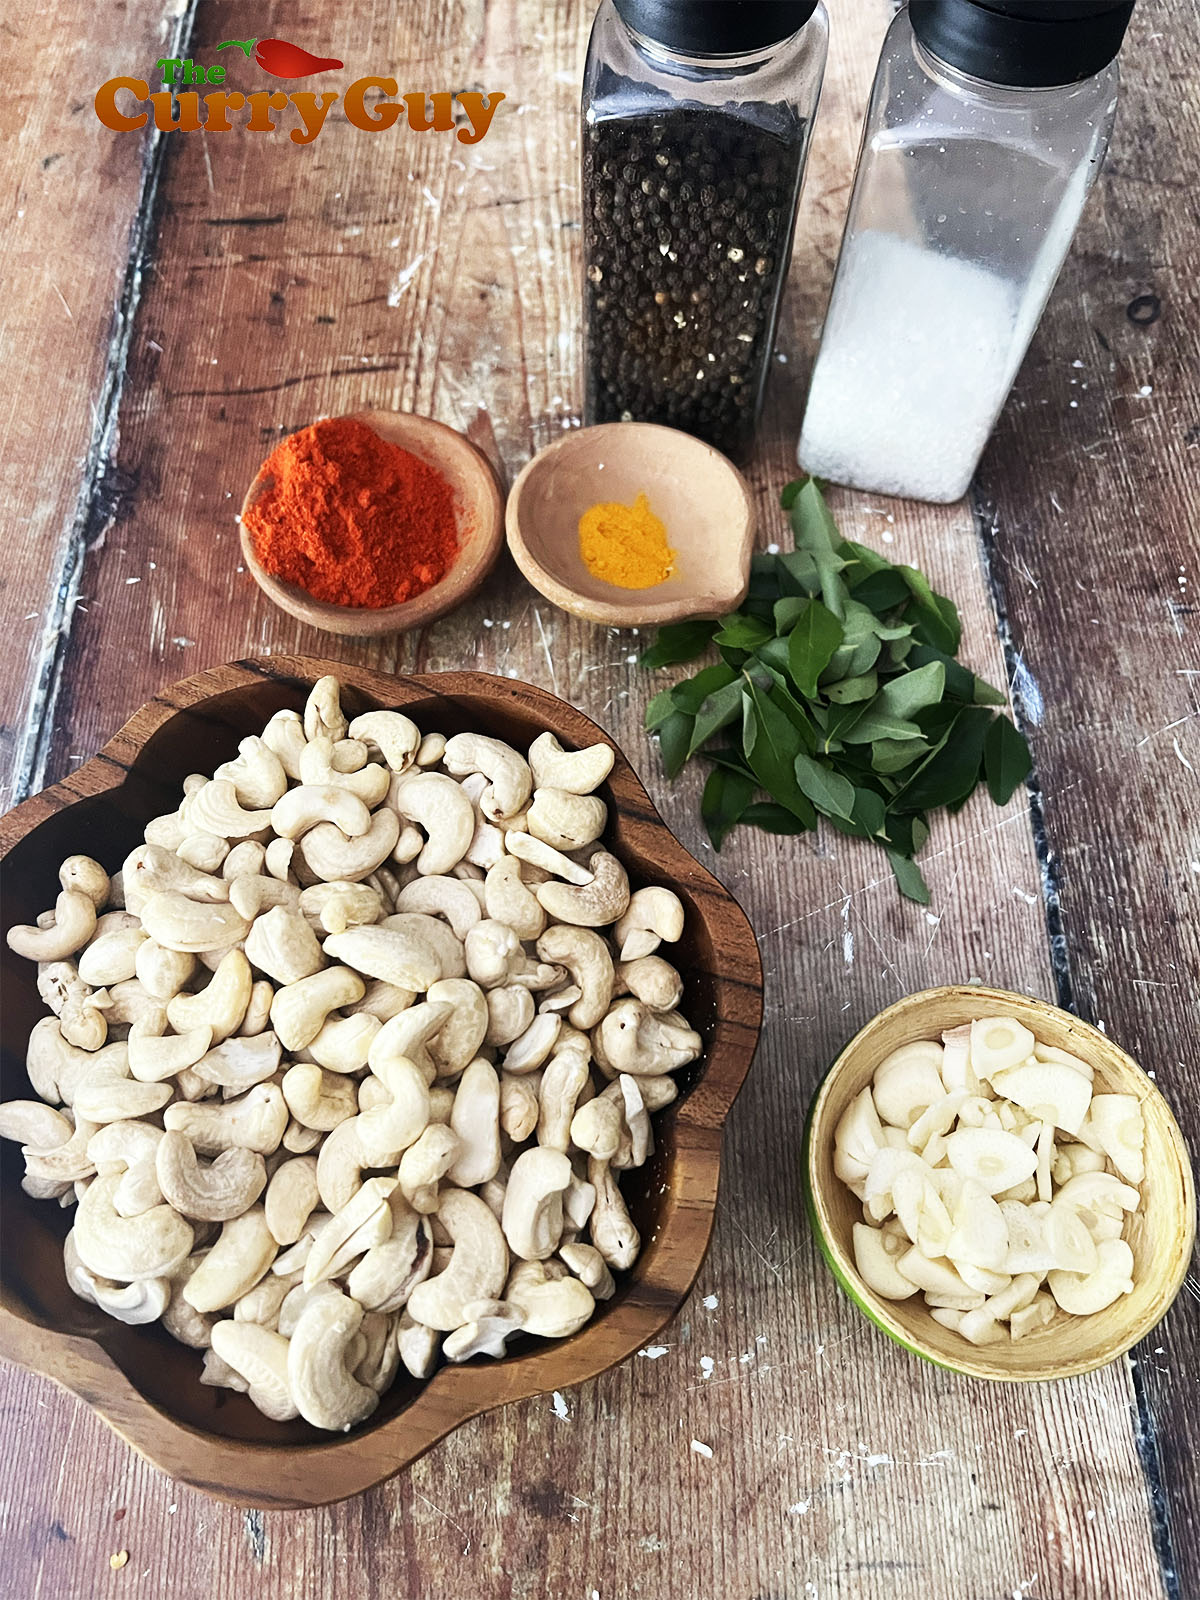 Ingredients for Sri Lankan fried cashews